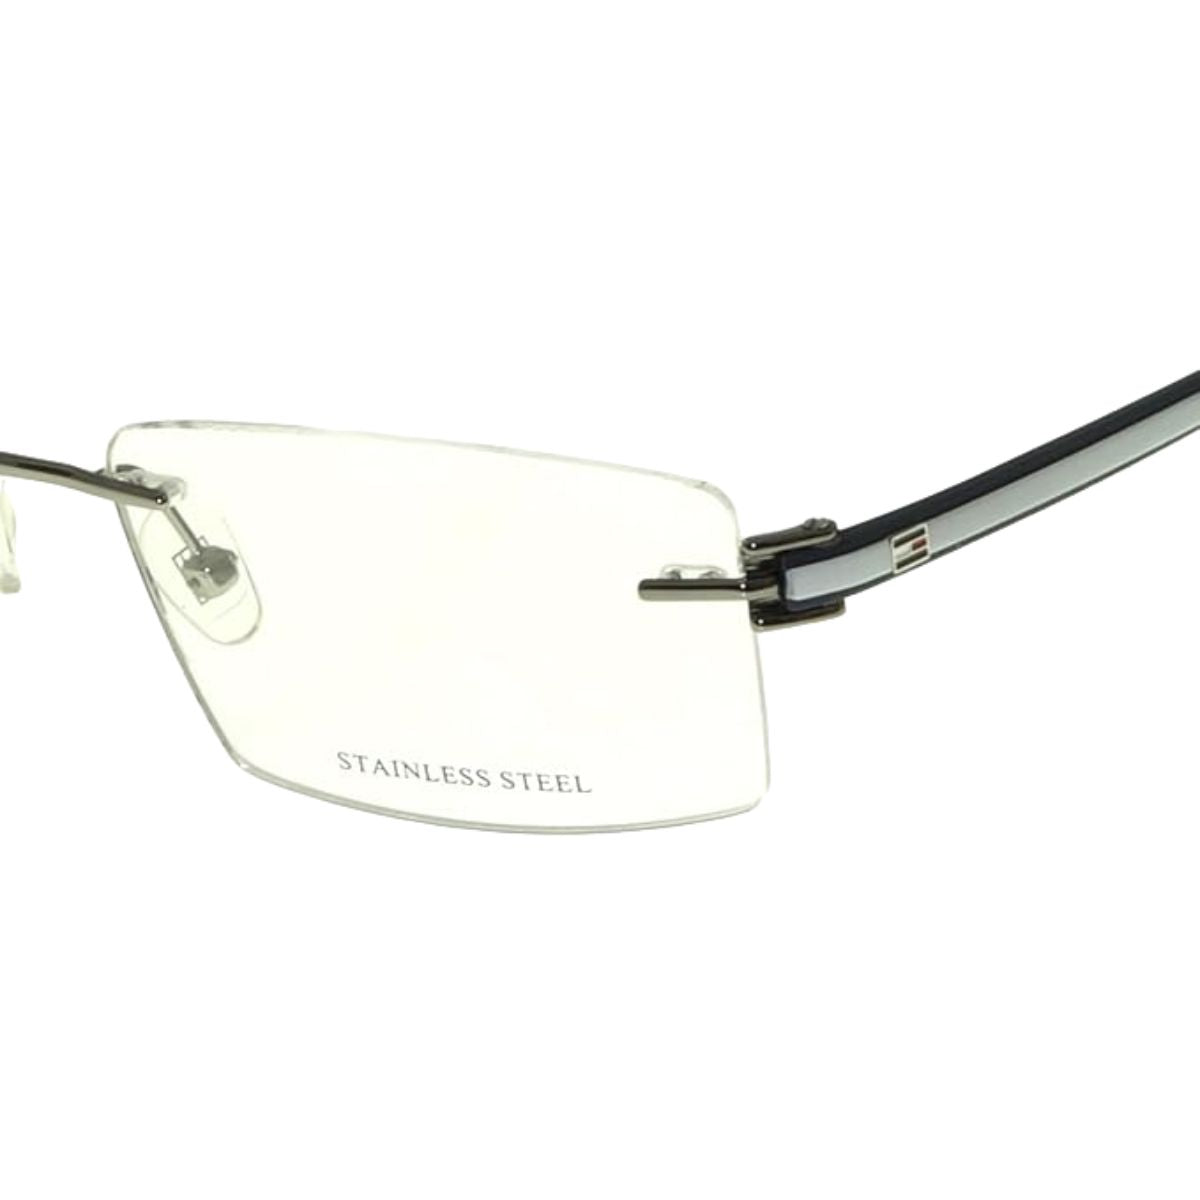 "buy Tommy Hilfiger 5733 C4 optical eyewear frame for women's at optorium"